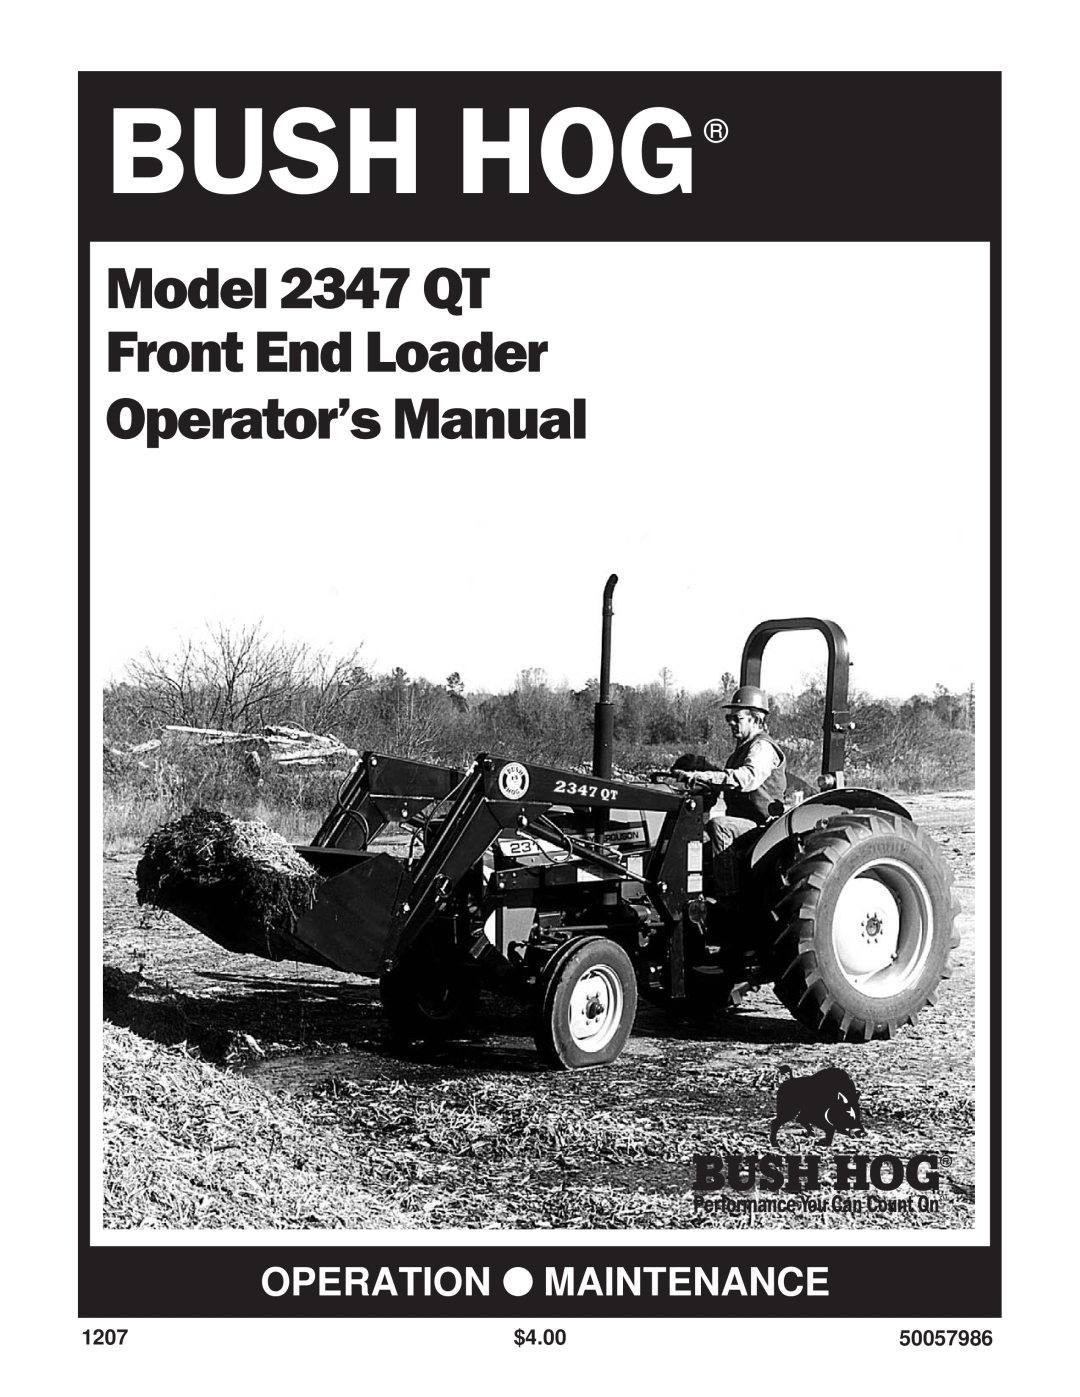 Bush Hog manual 1207, $4.00, 50057986, Bush Hog, Model 2347 QT Front End Loader Operator’s Manual 